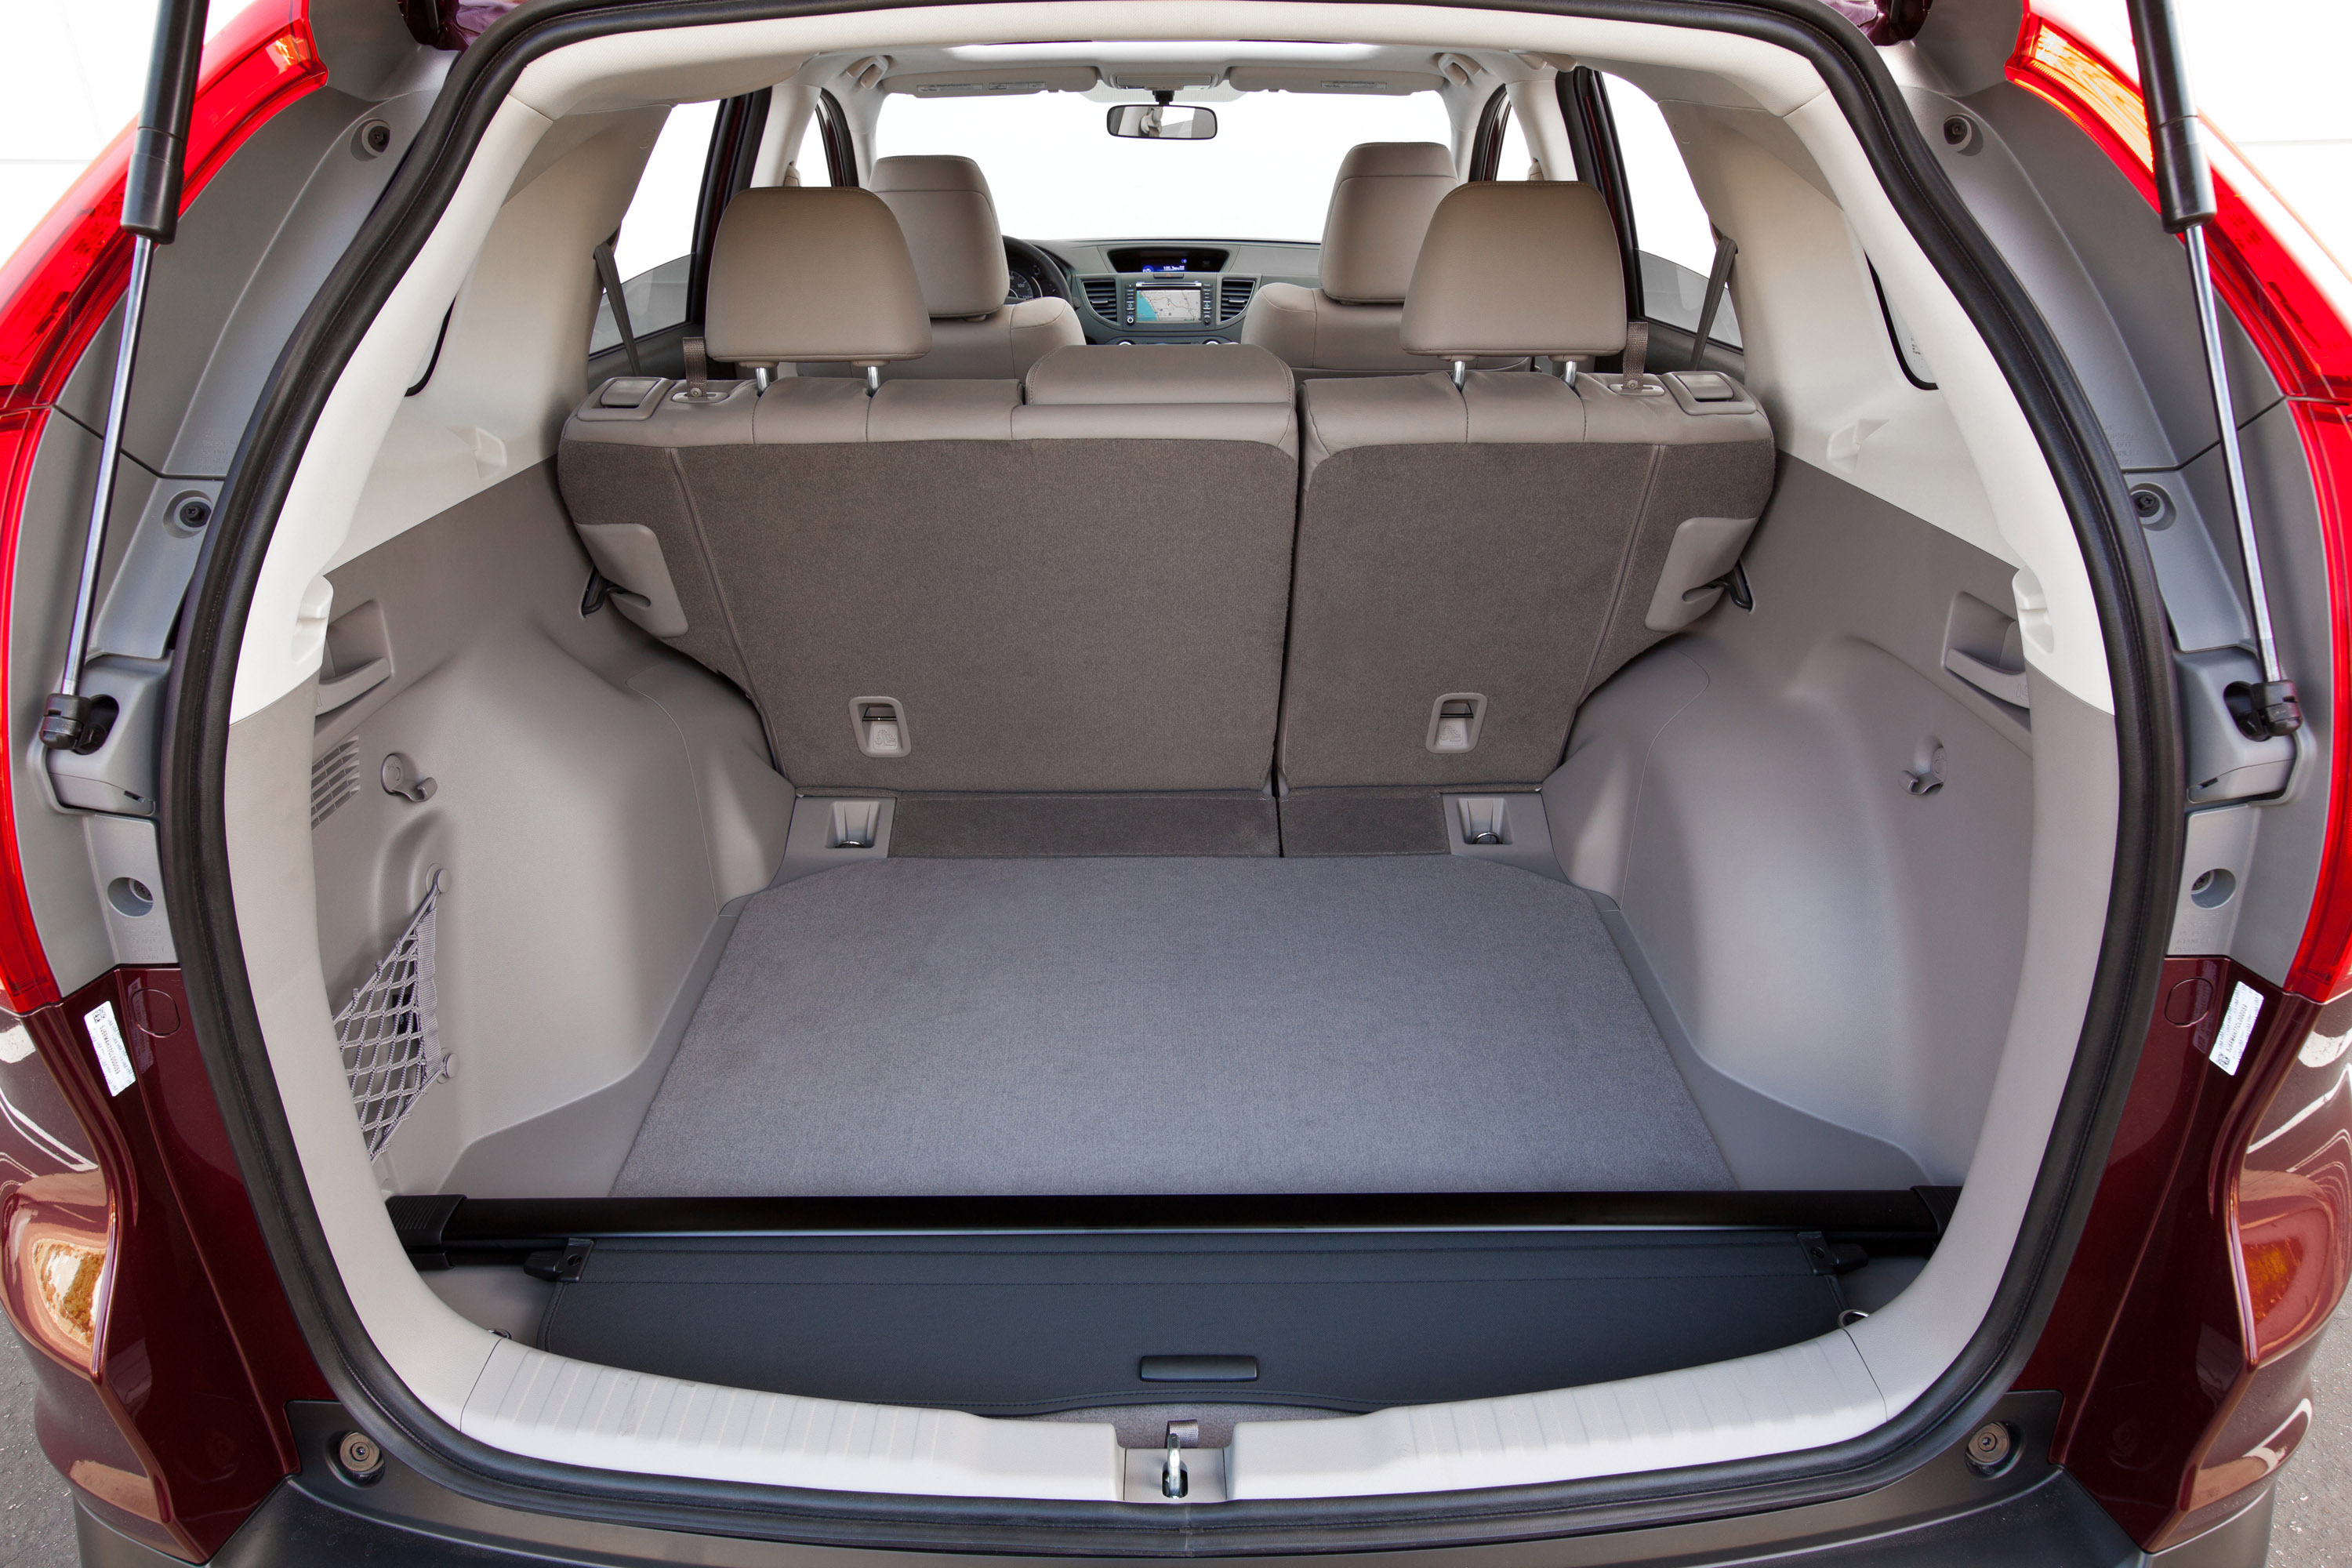 Багажник honda crv. Honda CR-V 4 багажник. Багажник Хонда СРВ 4 поколения. Honda CR-V 2012 багажник. Honda CR-V 2 багажник.